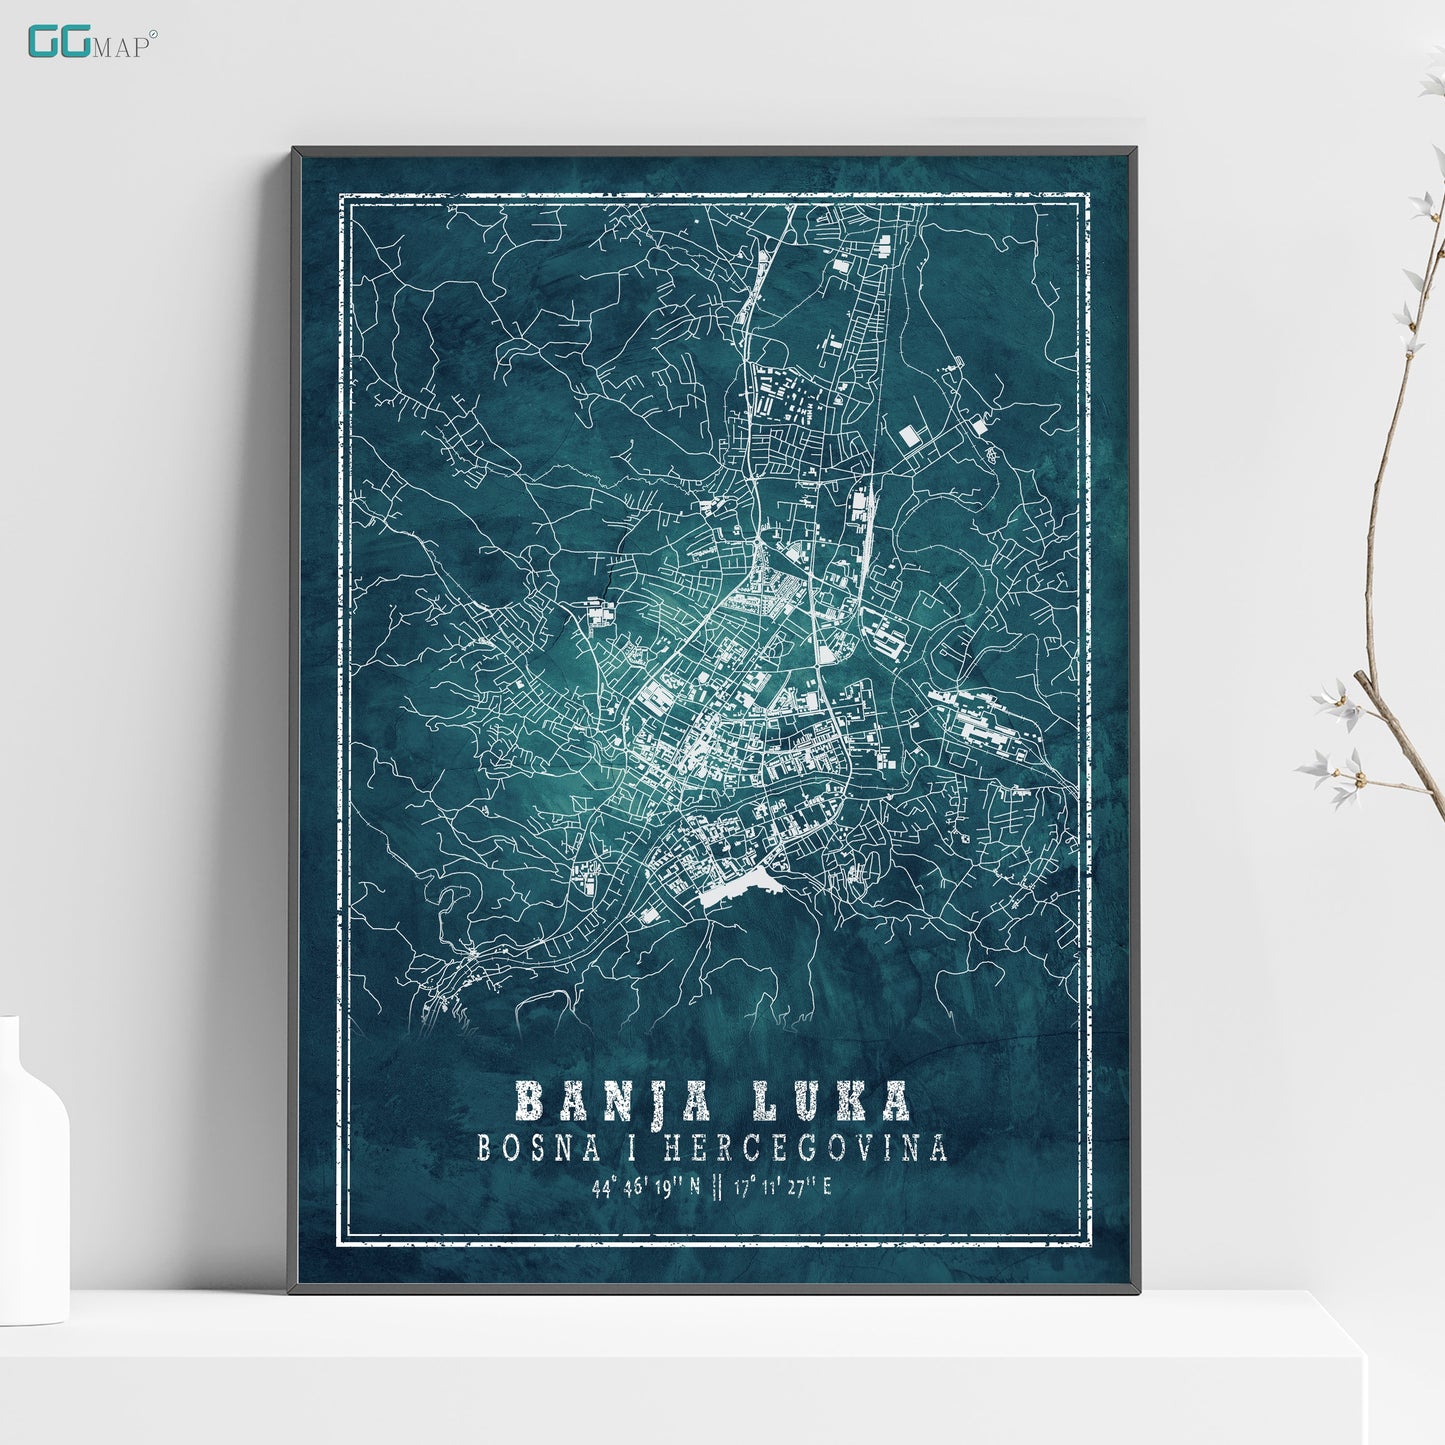 a poster of a map of banita luka